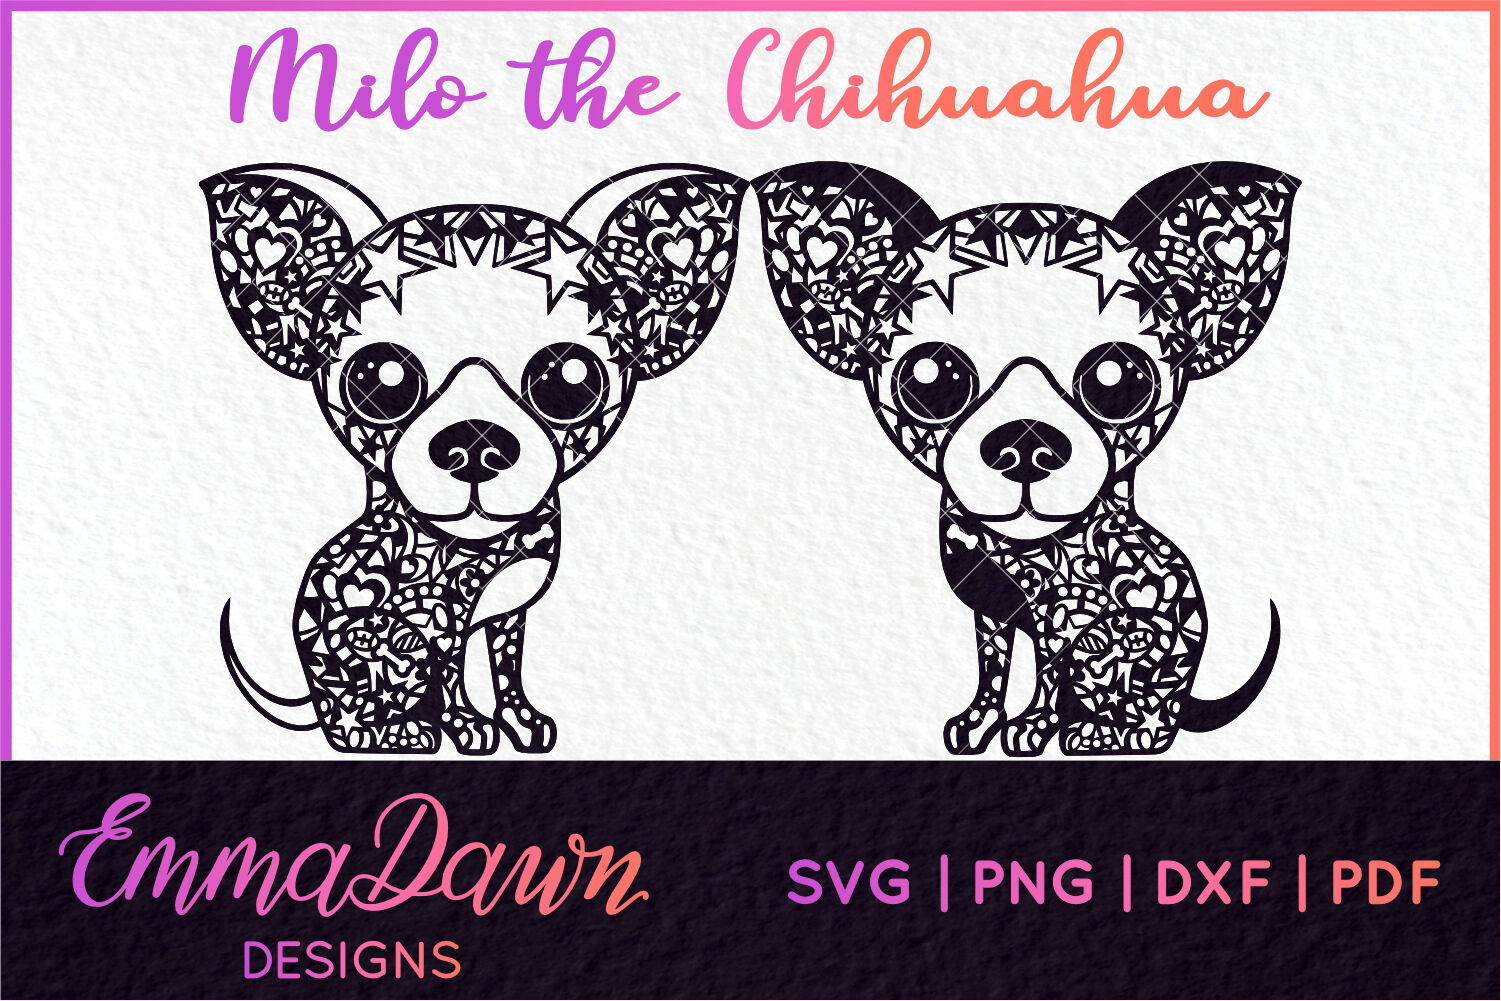 Download Milo The Chihuahua Dog Mandala Zentangle 2 Designs Svg By Emma Dawn Designs Thehungryjpeg Com